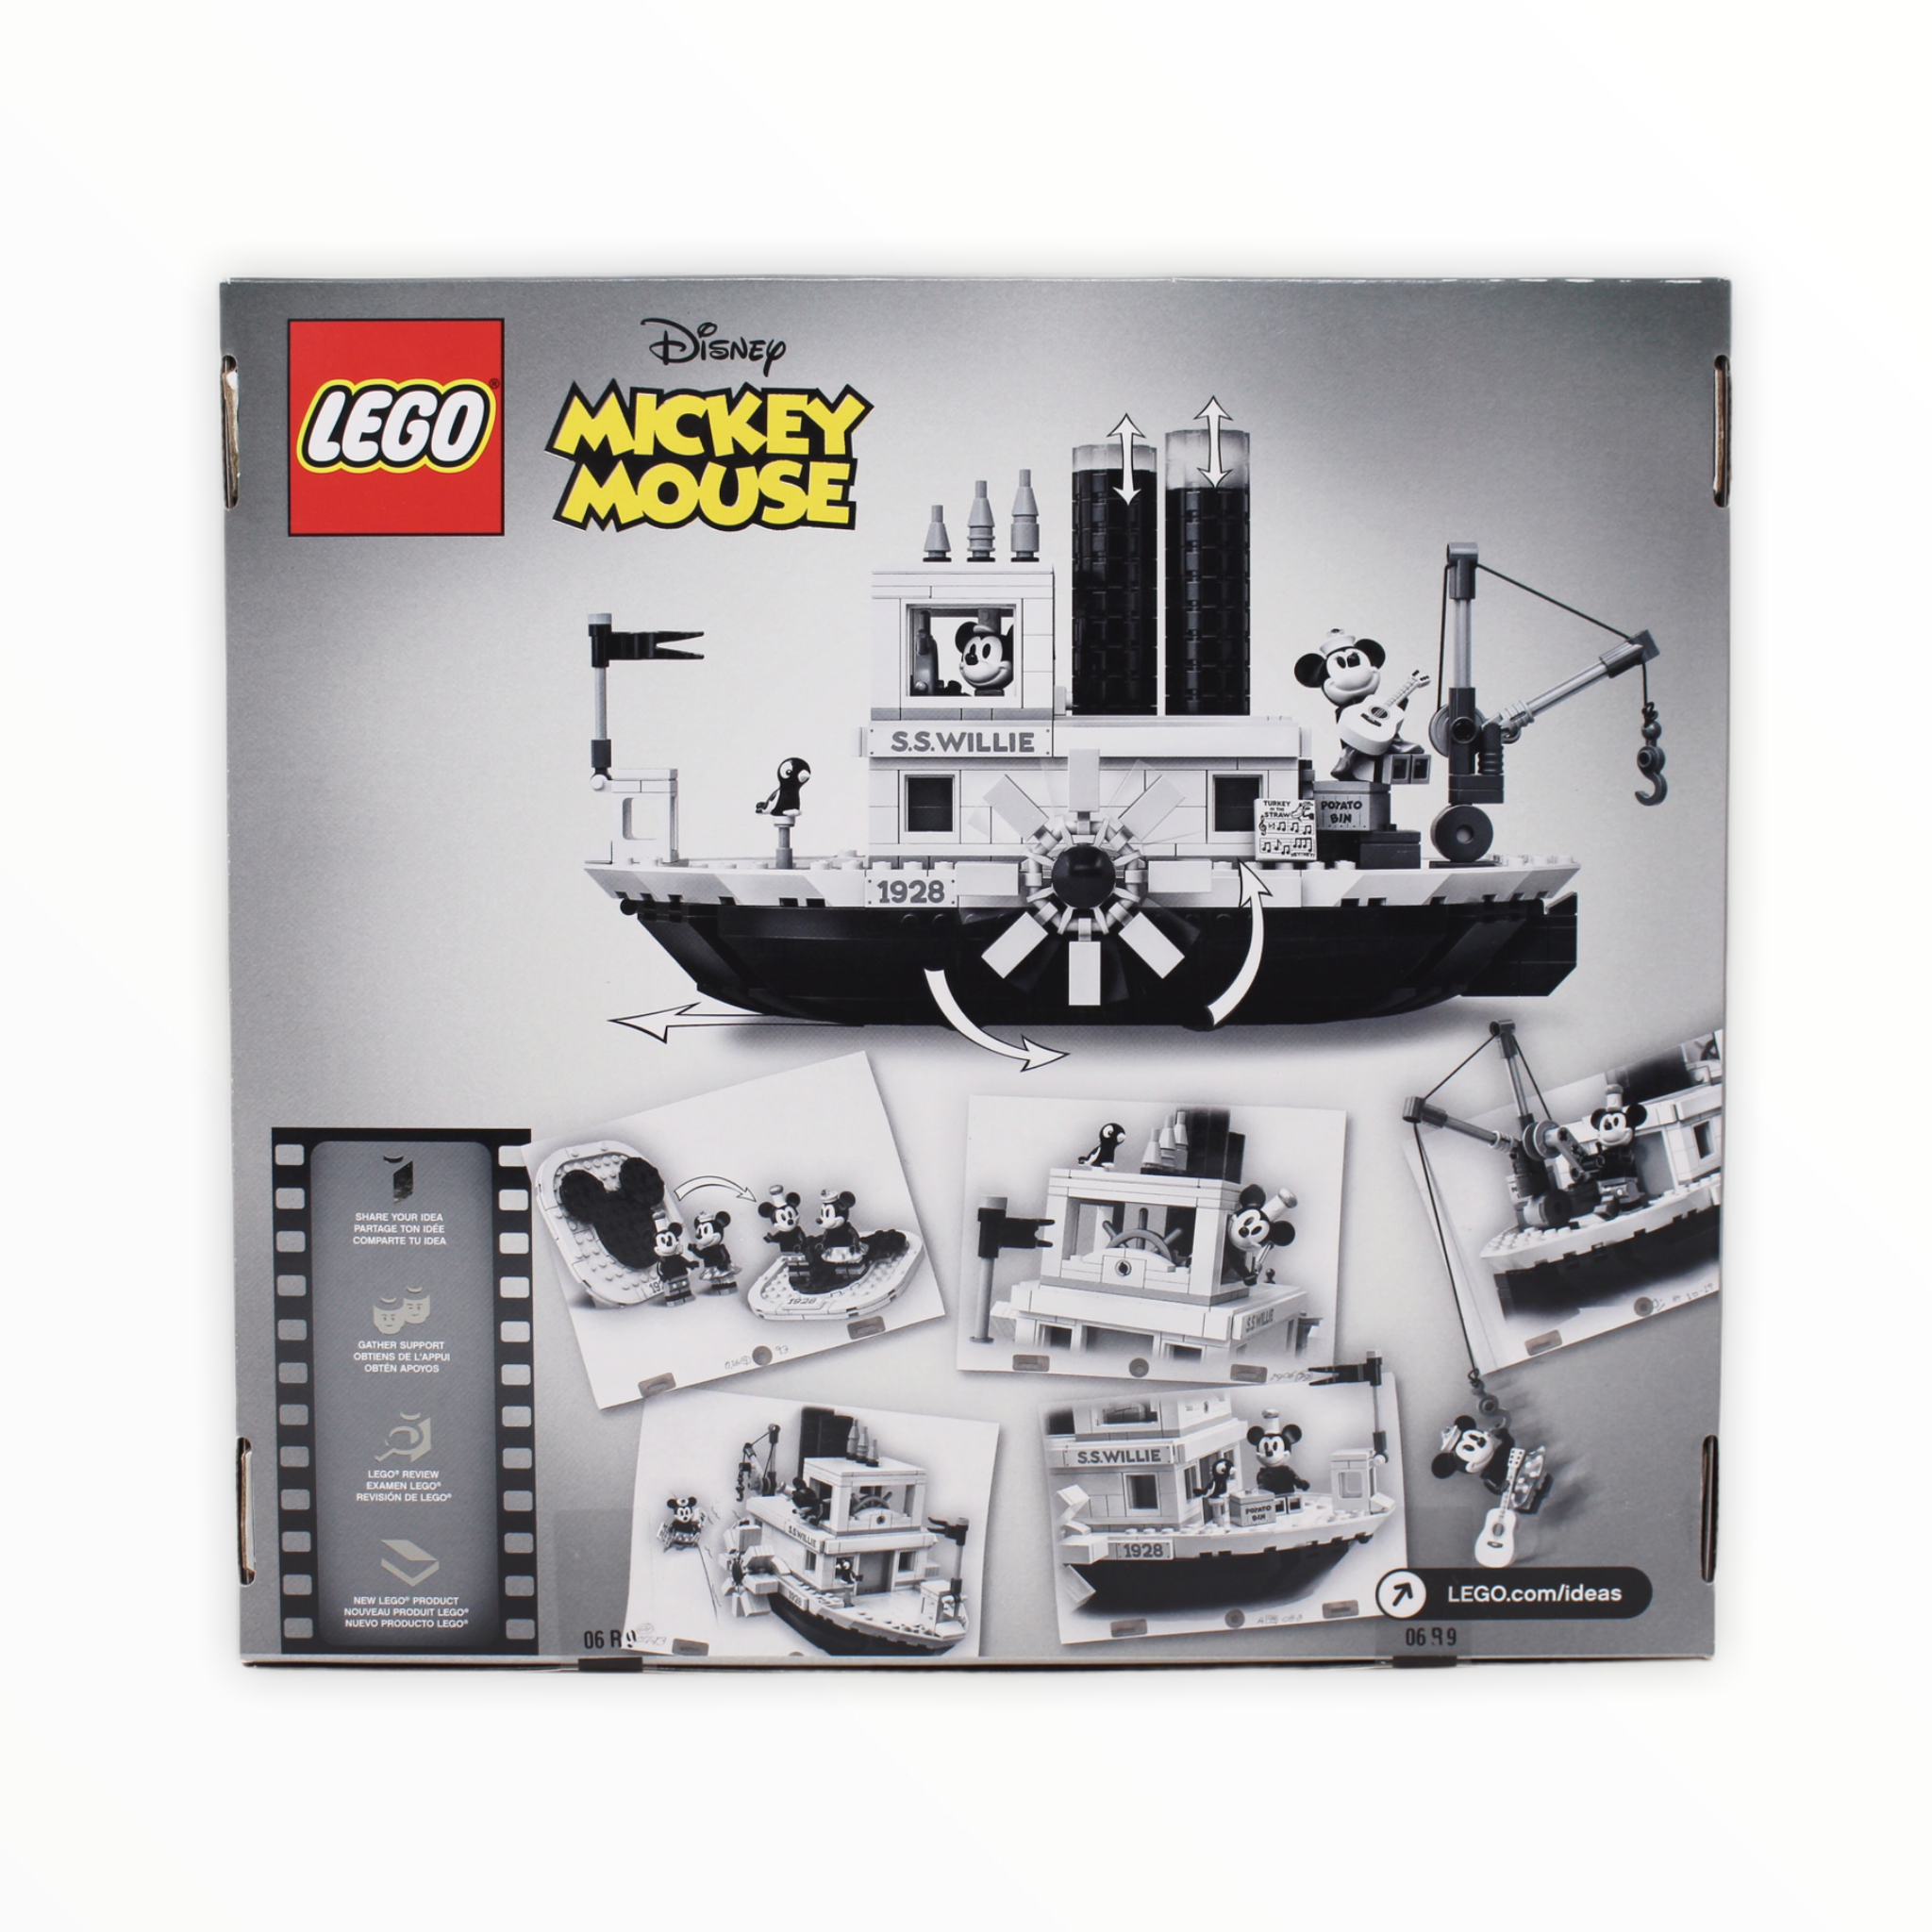 Retired Set 21317 LEGO Ideas Steamboat Willie